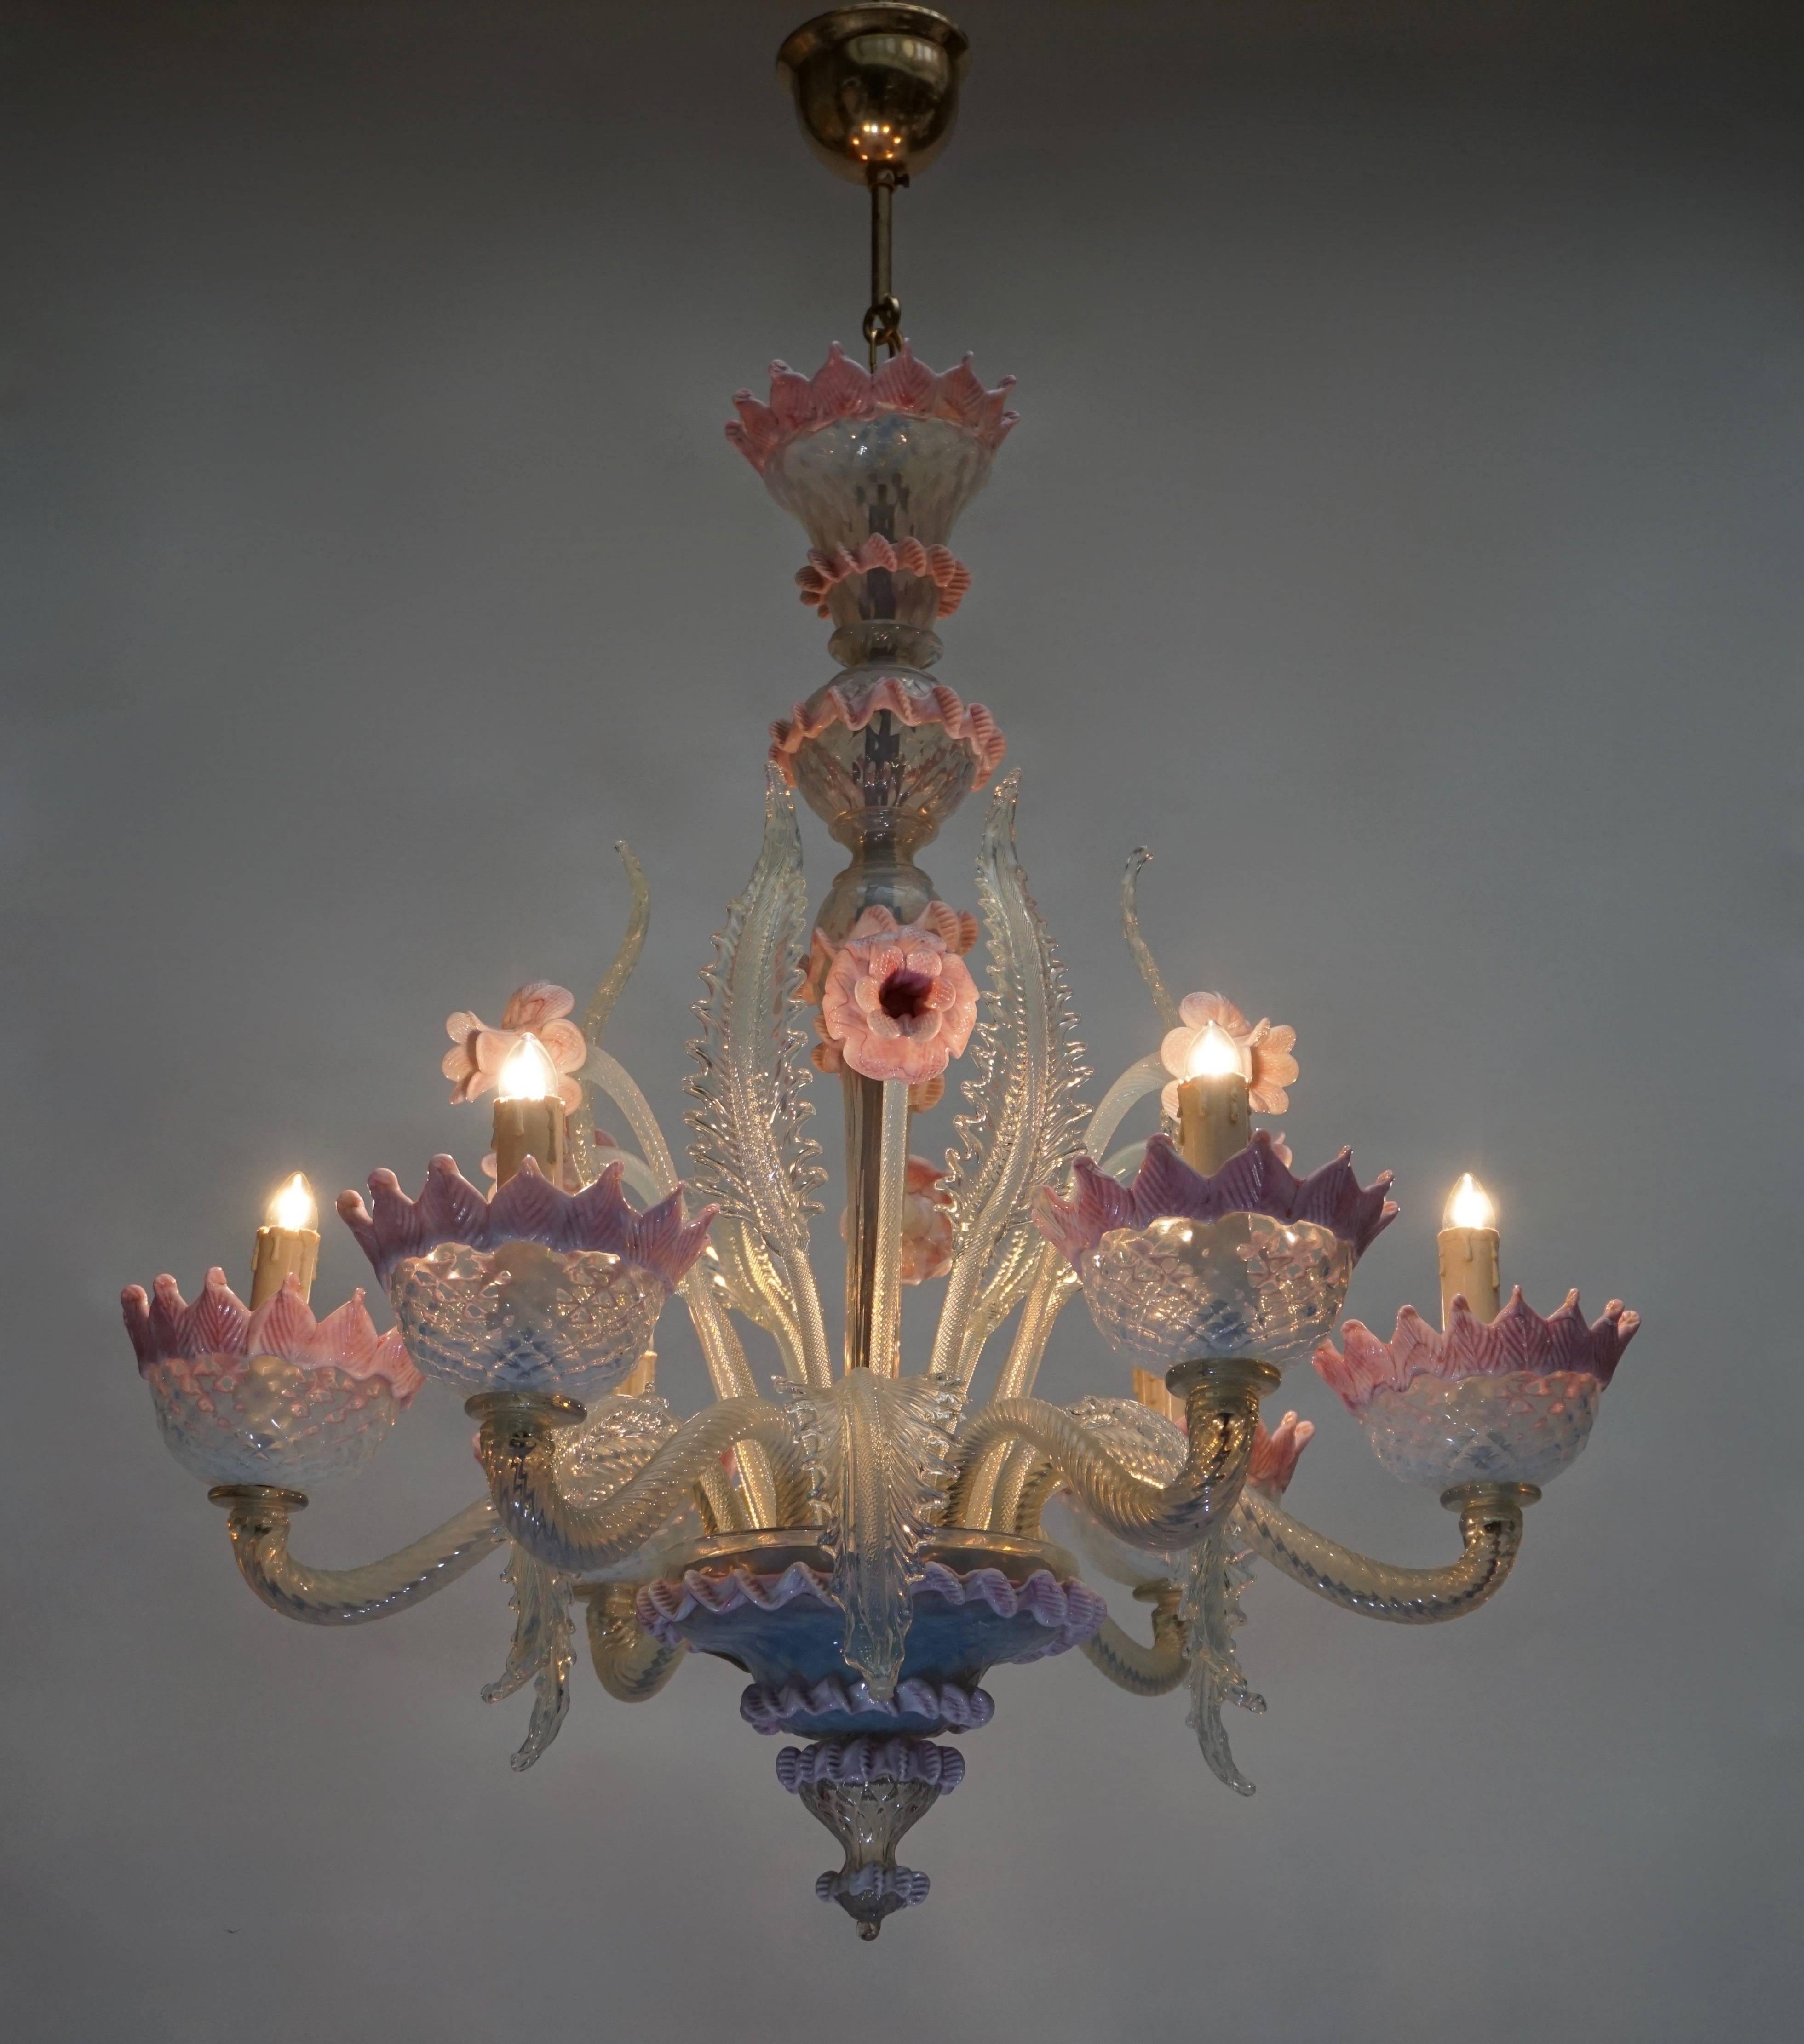 Venetian Murano glass chandelier.
Measure: Diameter 78 cm.
Height fixture 70 cm.
Total height with the chain 90 cm.